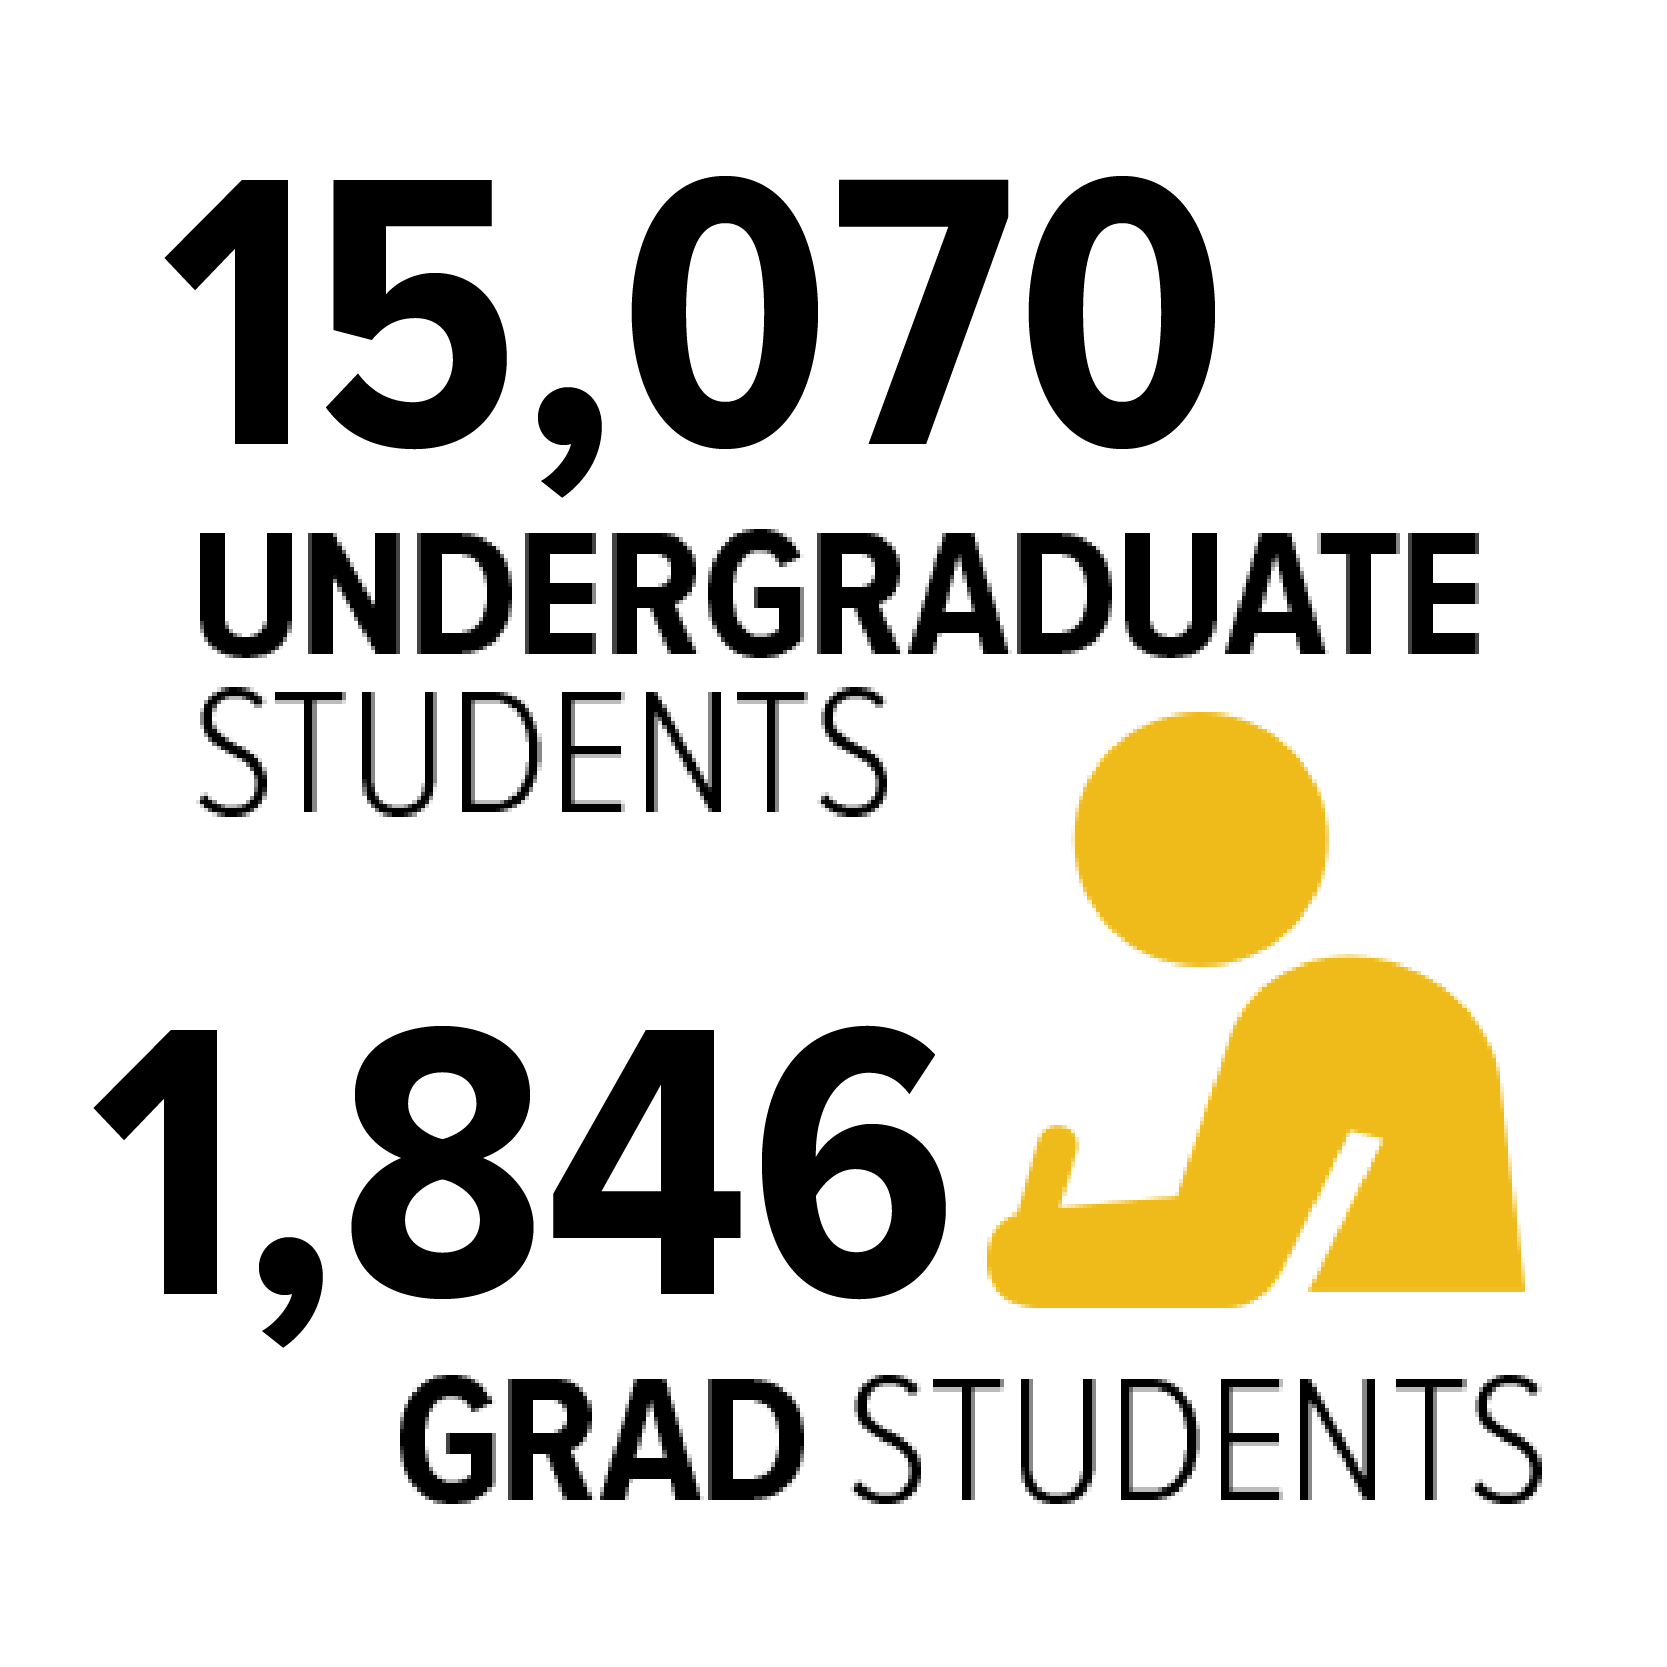 15070 undergraduate students and 1846 graduate students